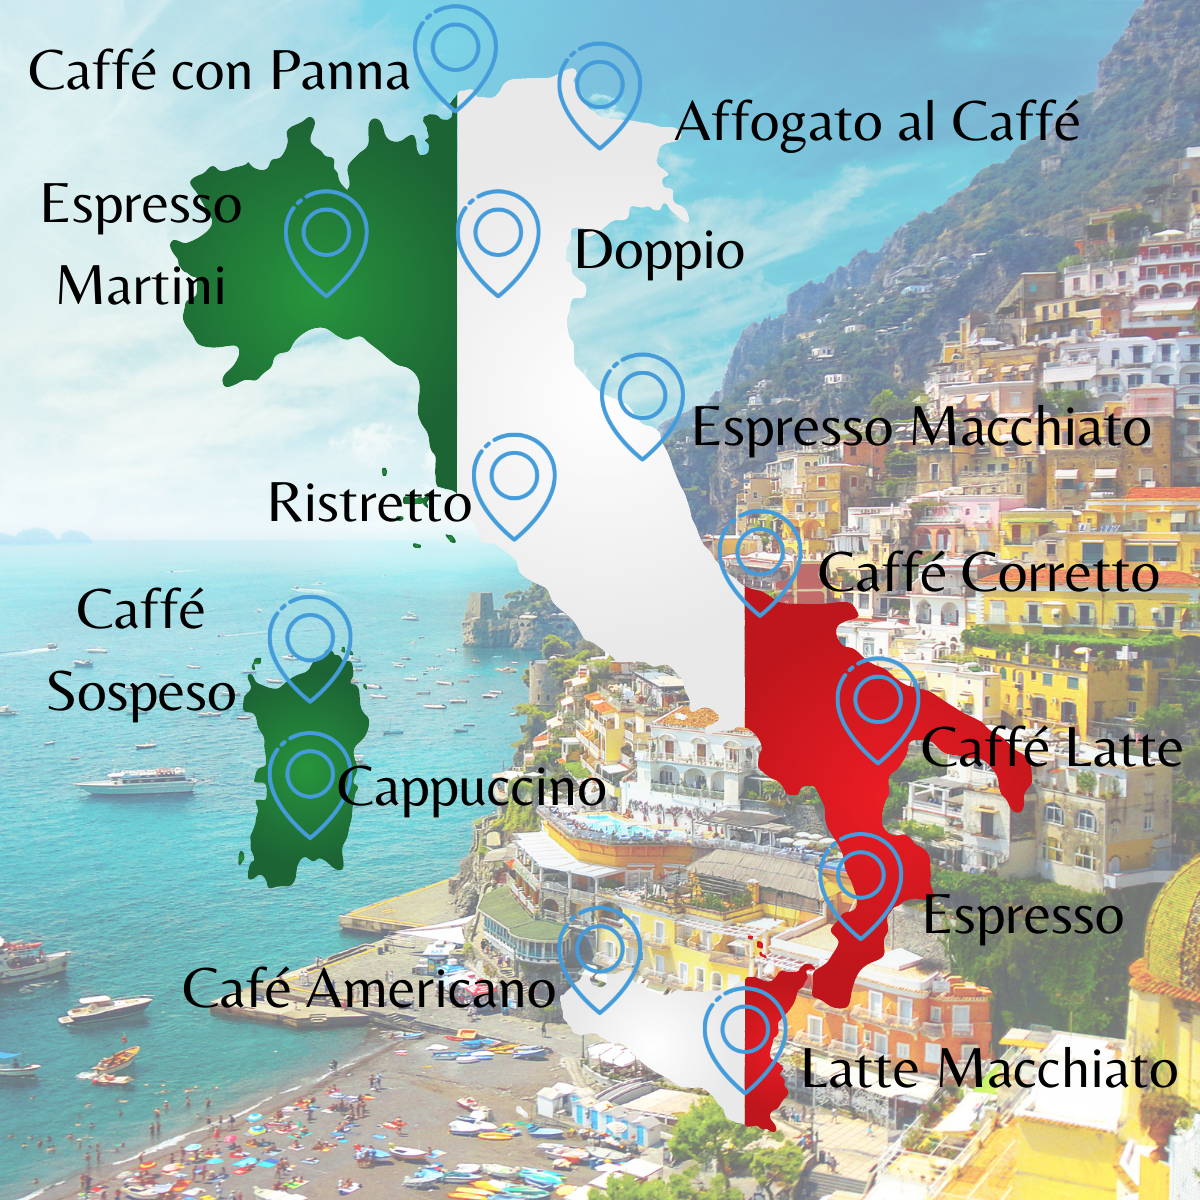 Koffie, Koffiesoorten, Italiaanse koffie, Koffiebonen, Espresso, Cappuccino, Doppio, Ristretto, Caffe Latte, koffierdrinken